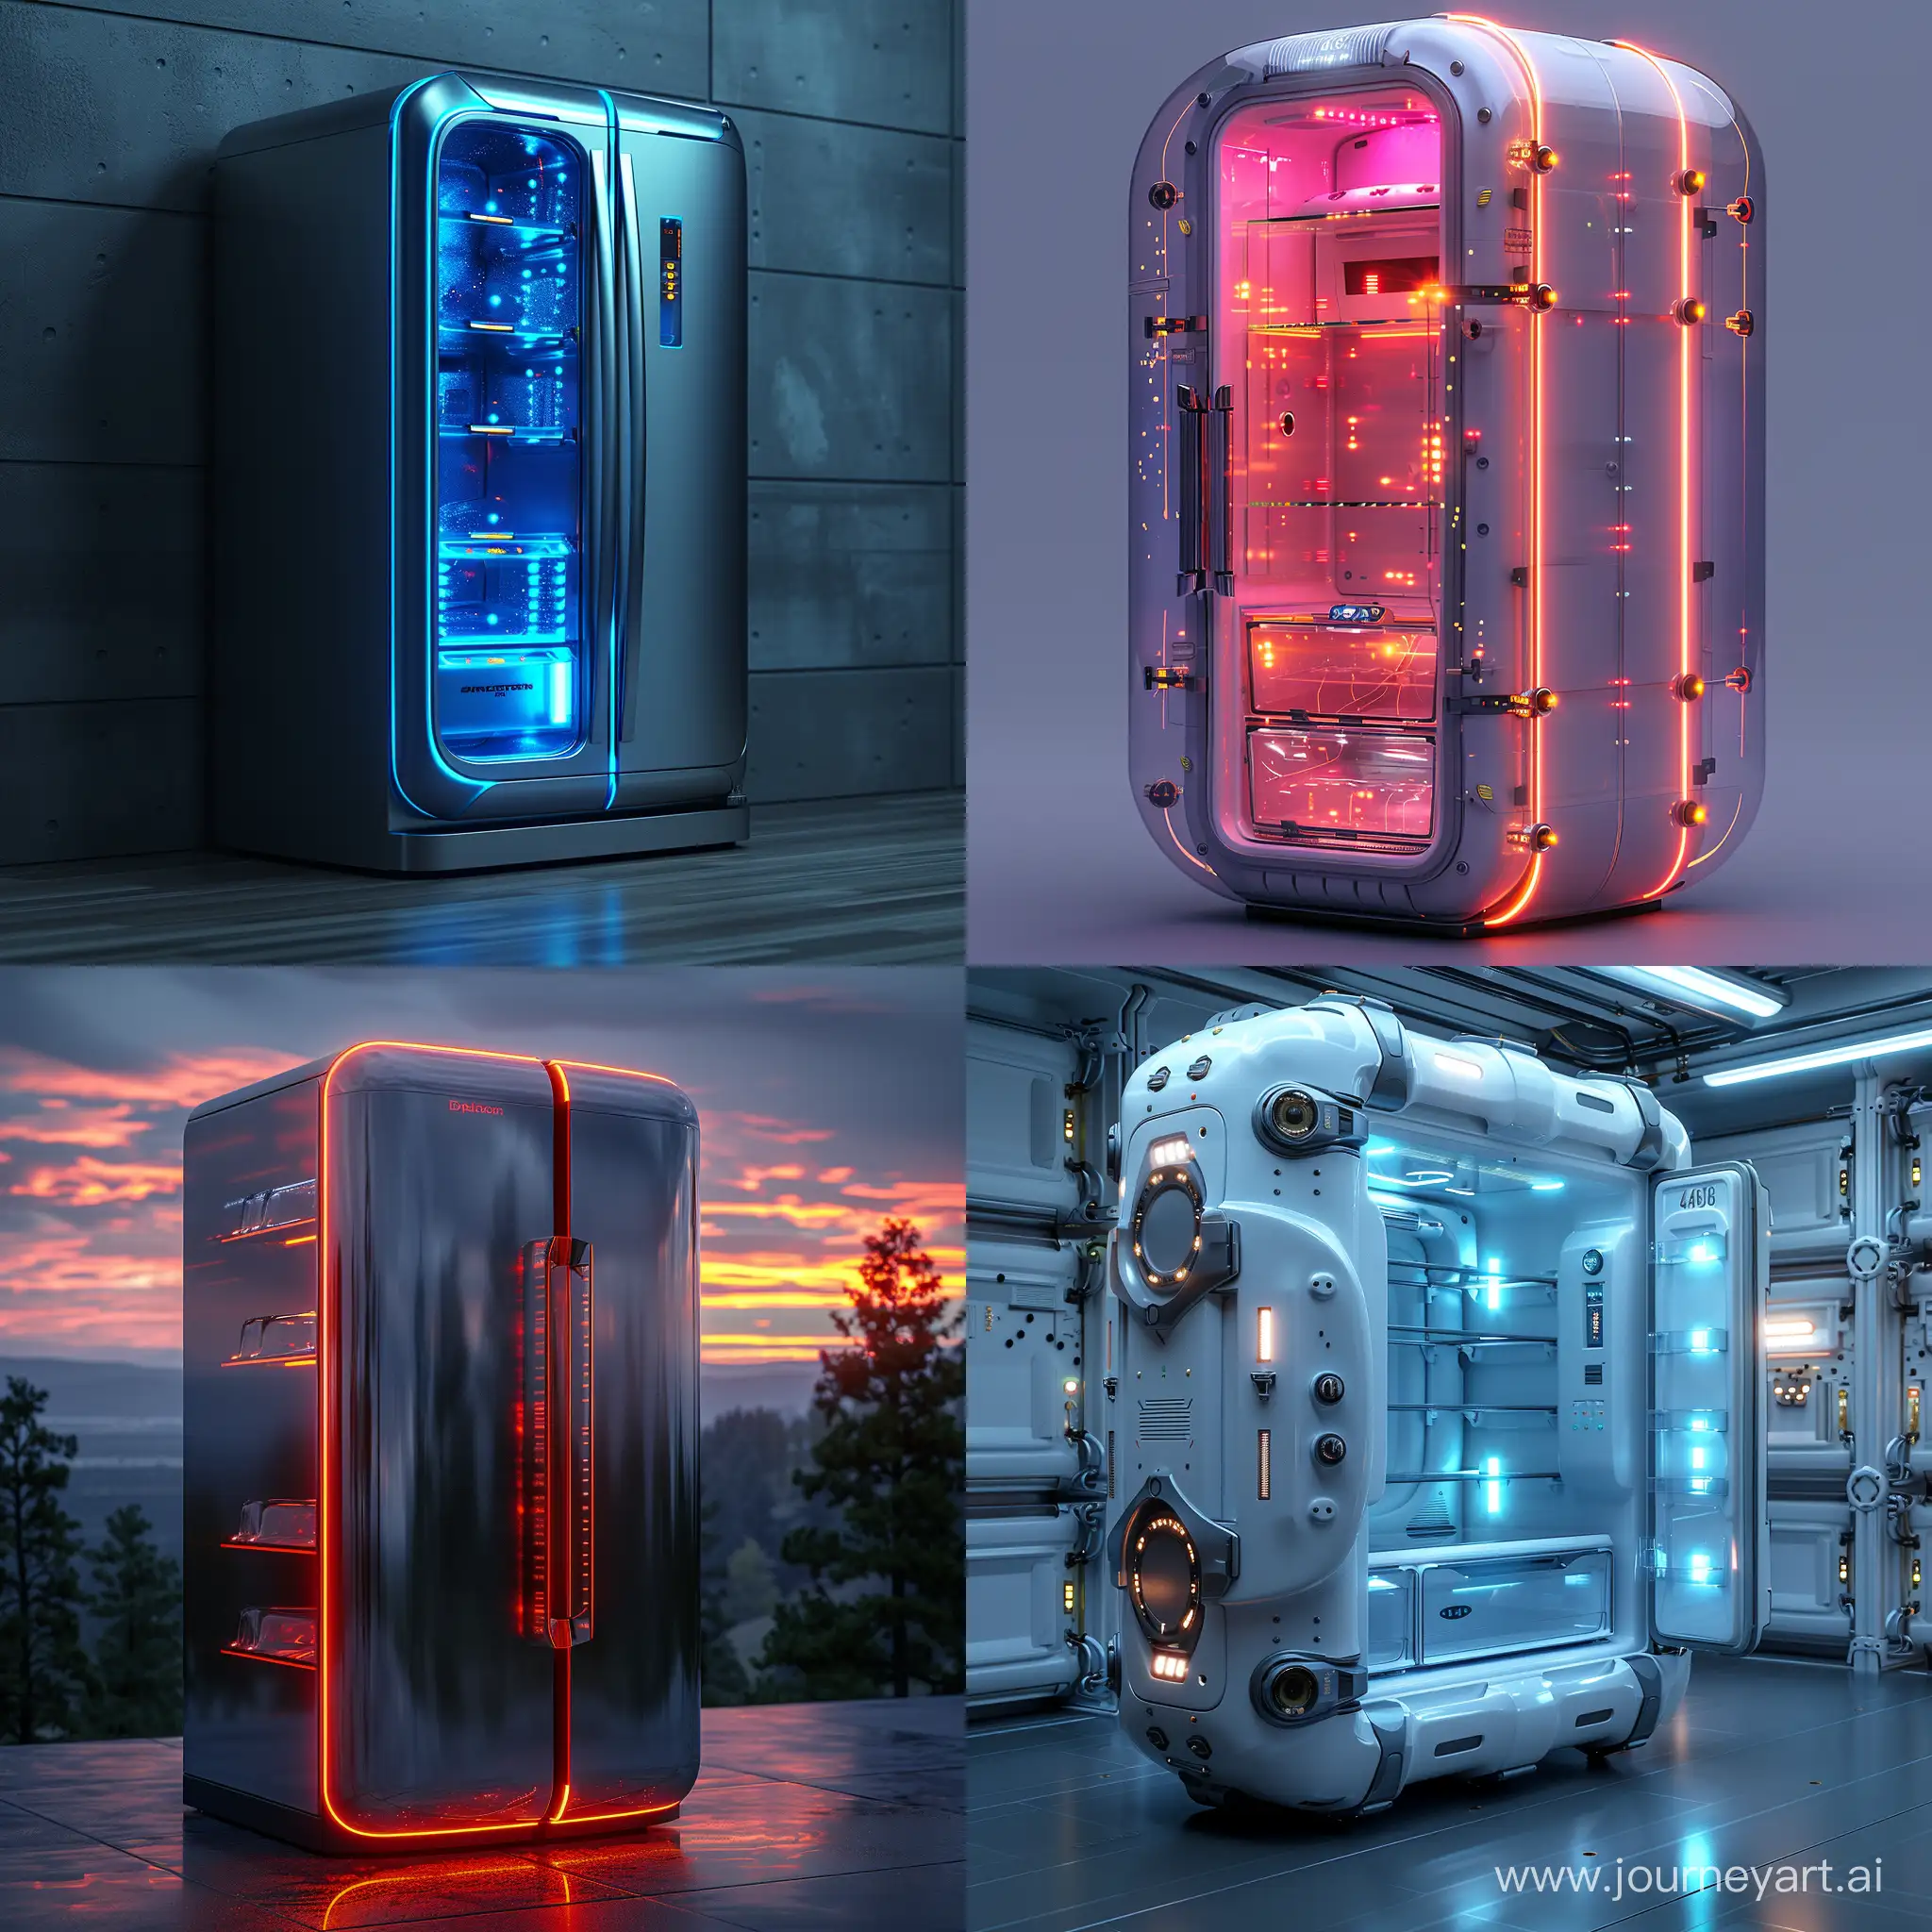 Futuristic-Refrigerator-in-Modern-Setting-Octane-Render-Art